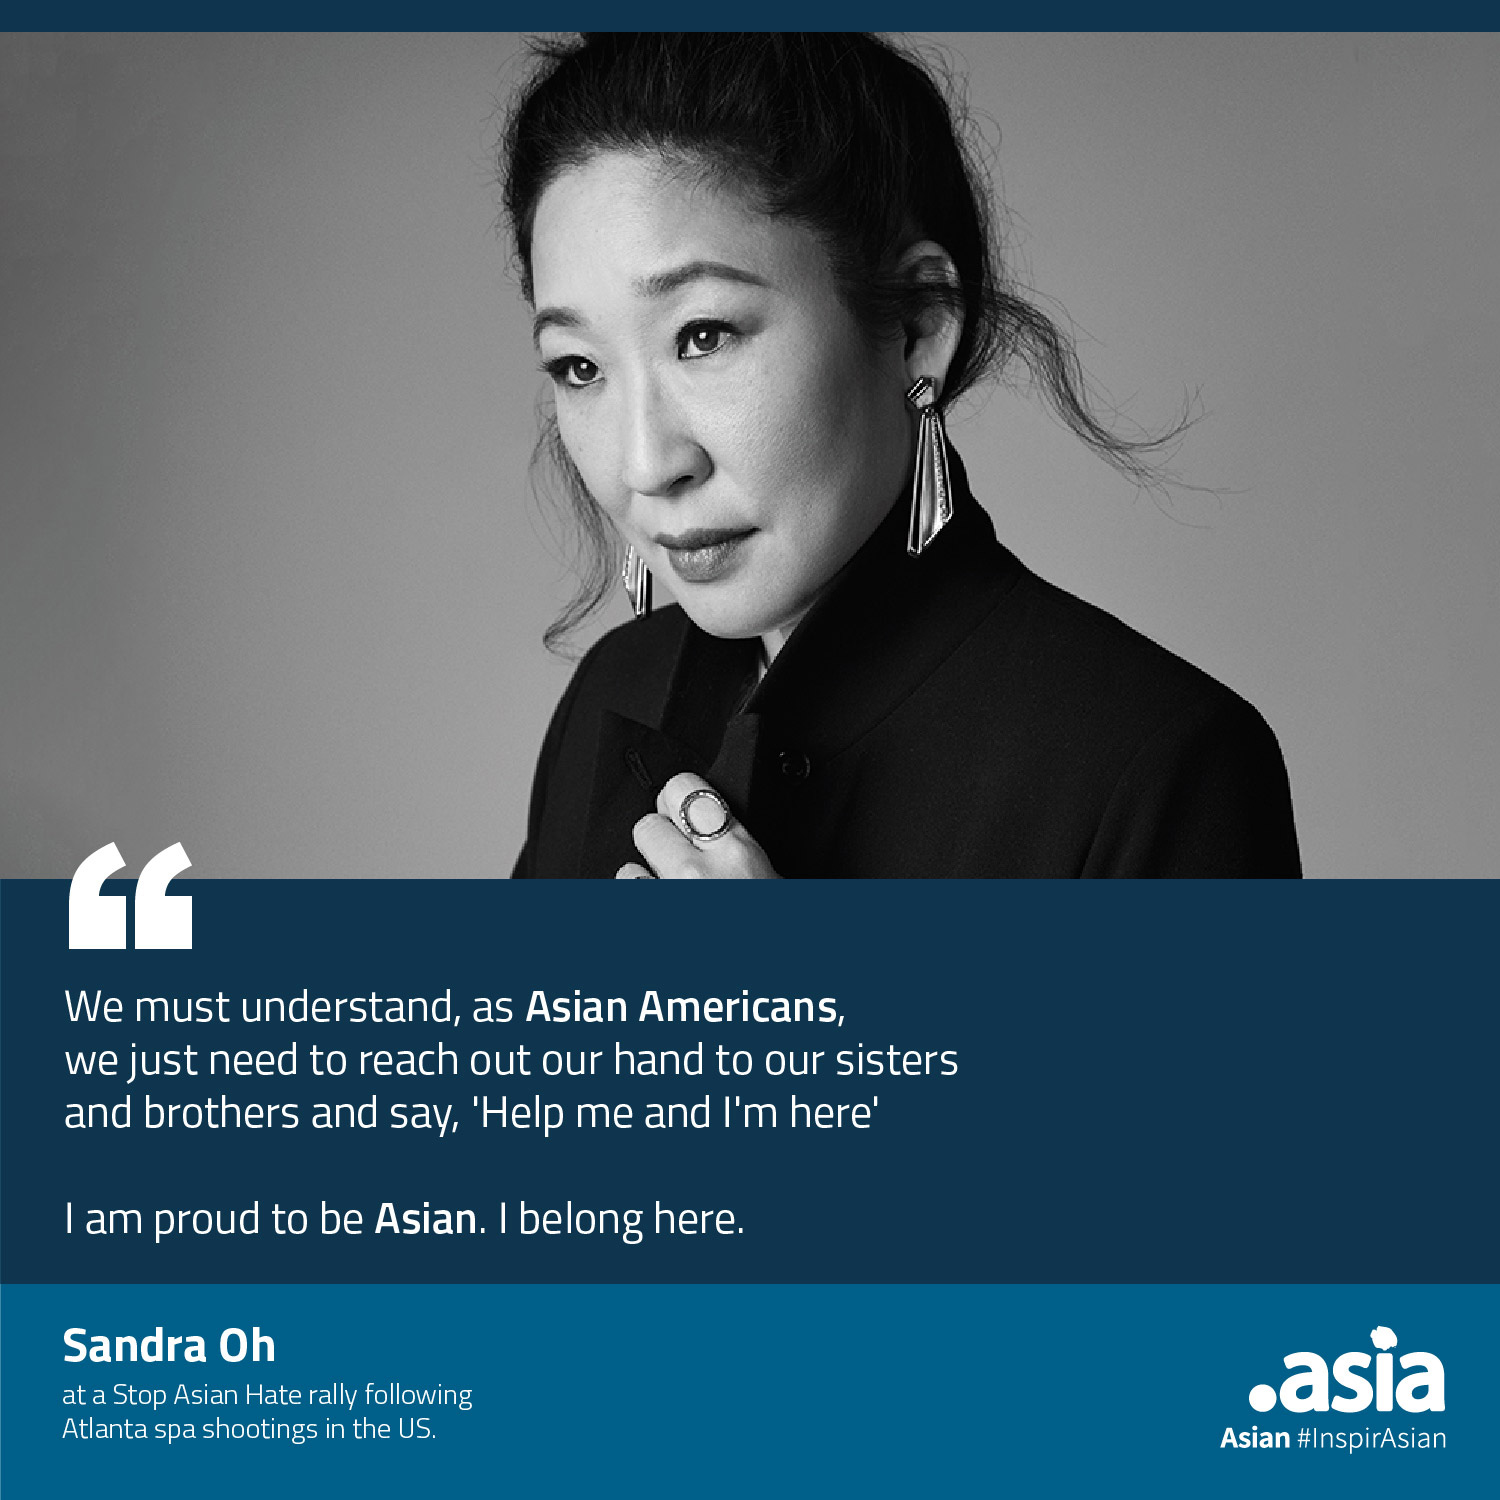 Asian #InspirAsian Image - Sandra Oh